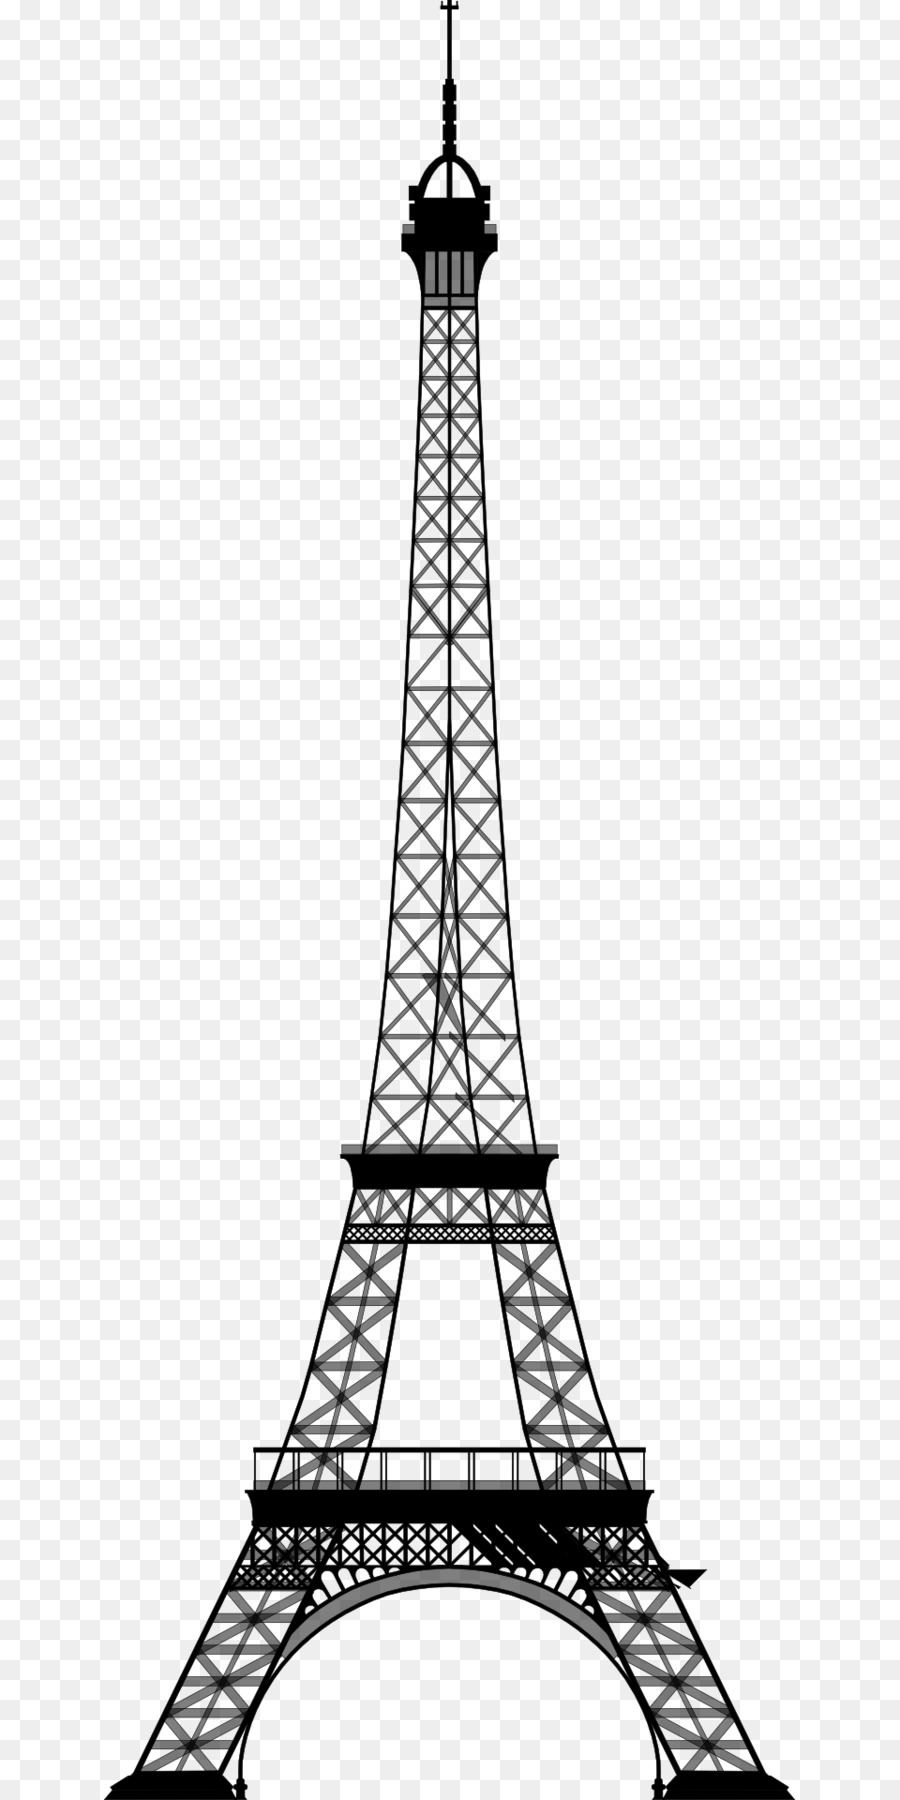 Eiffel Tower Clip art - eiffel tower png download - 960*1920 - Free Transparent Eiffel Tower png Download.